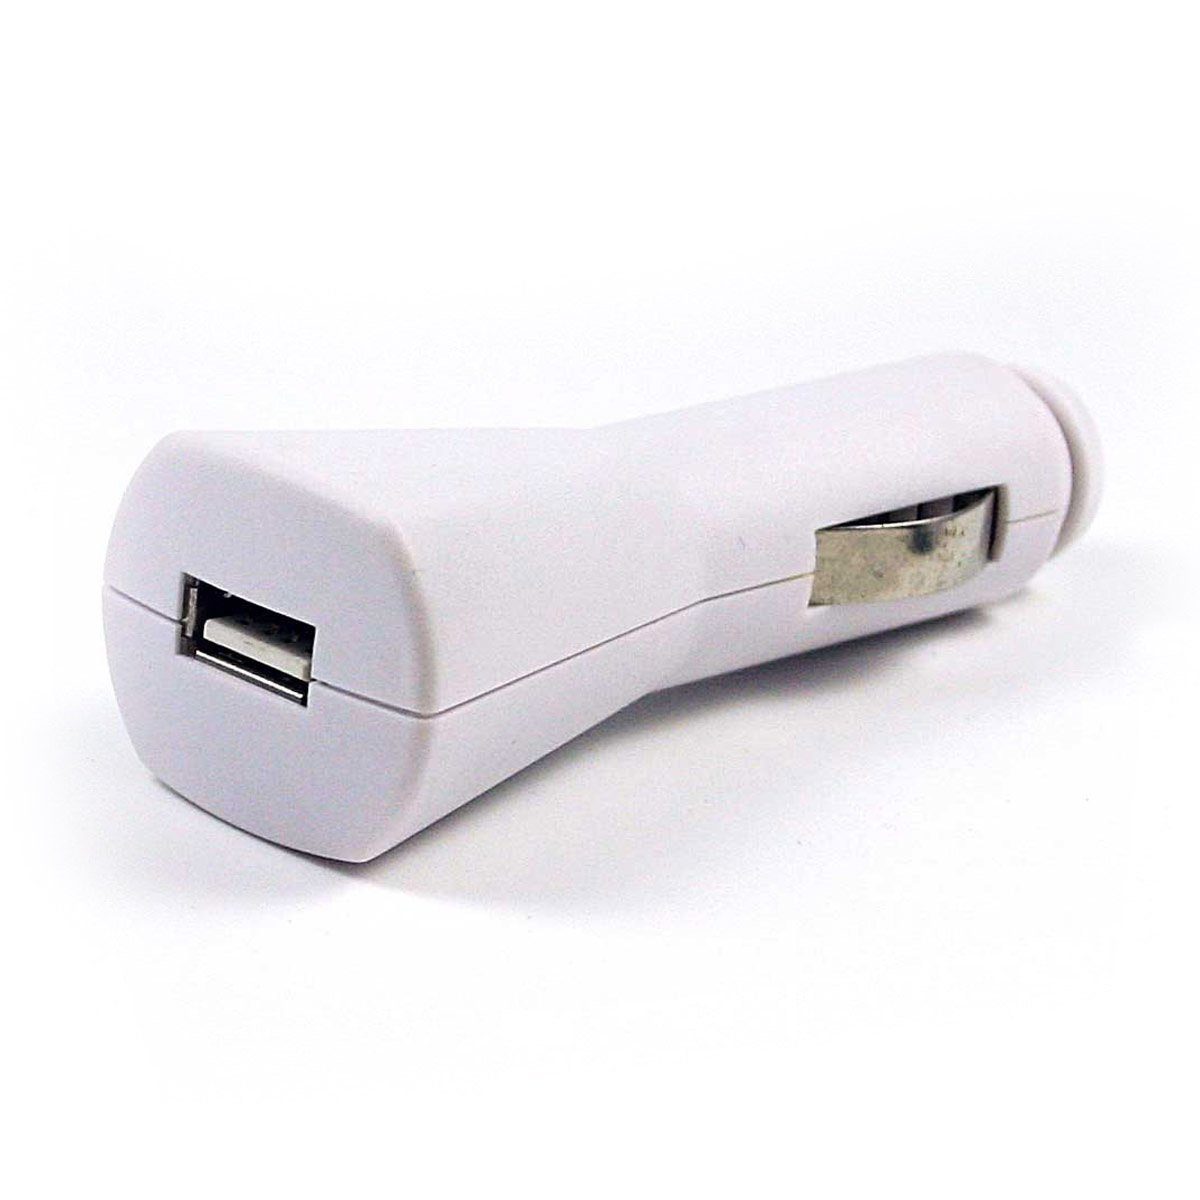 Goods+Gadgets USB 12V KFZ Ladegerät KFZ-Adapter zu Automobilsteckdose, 500 mA